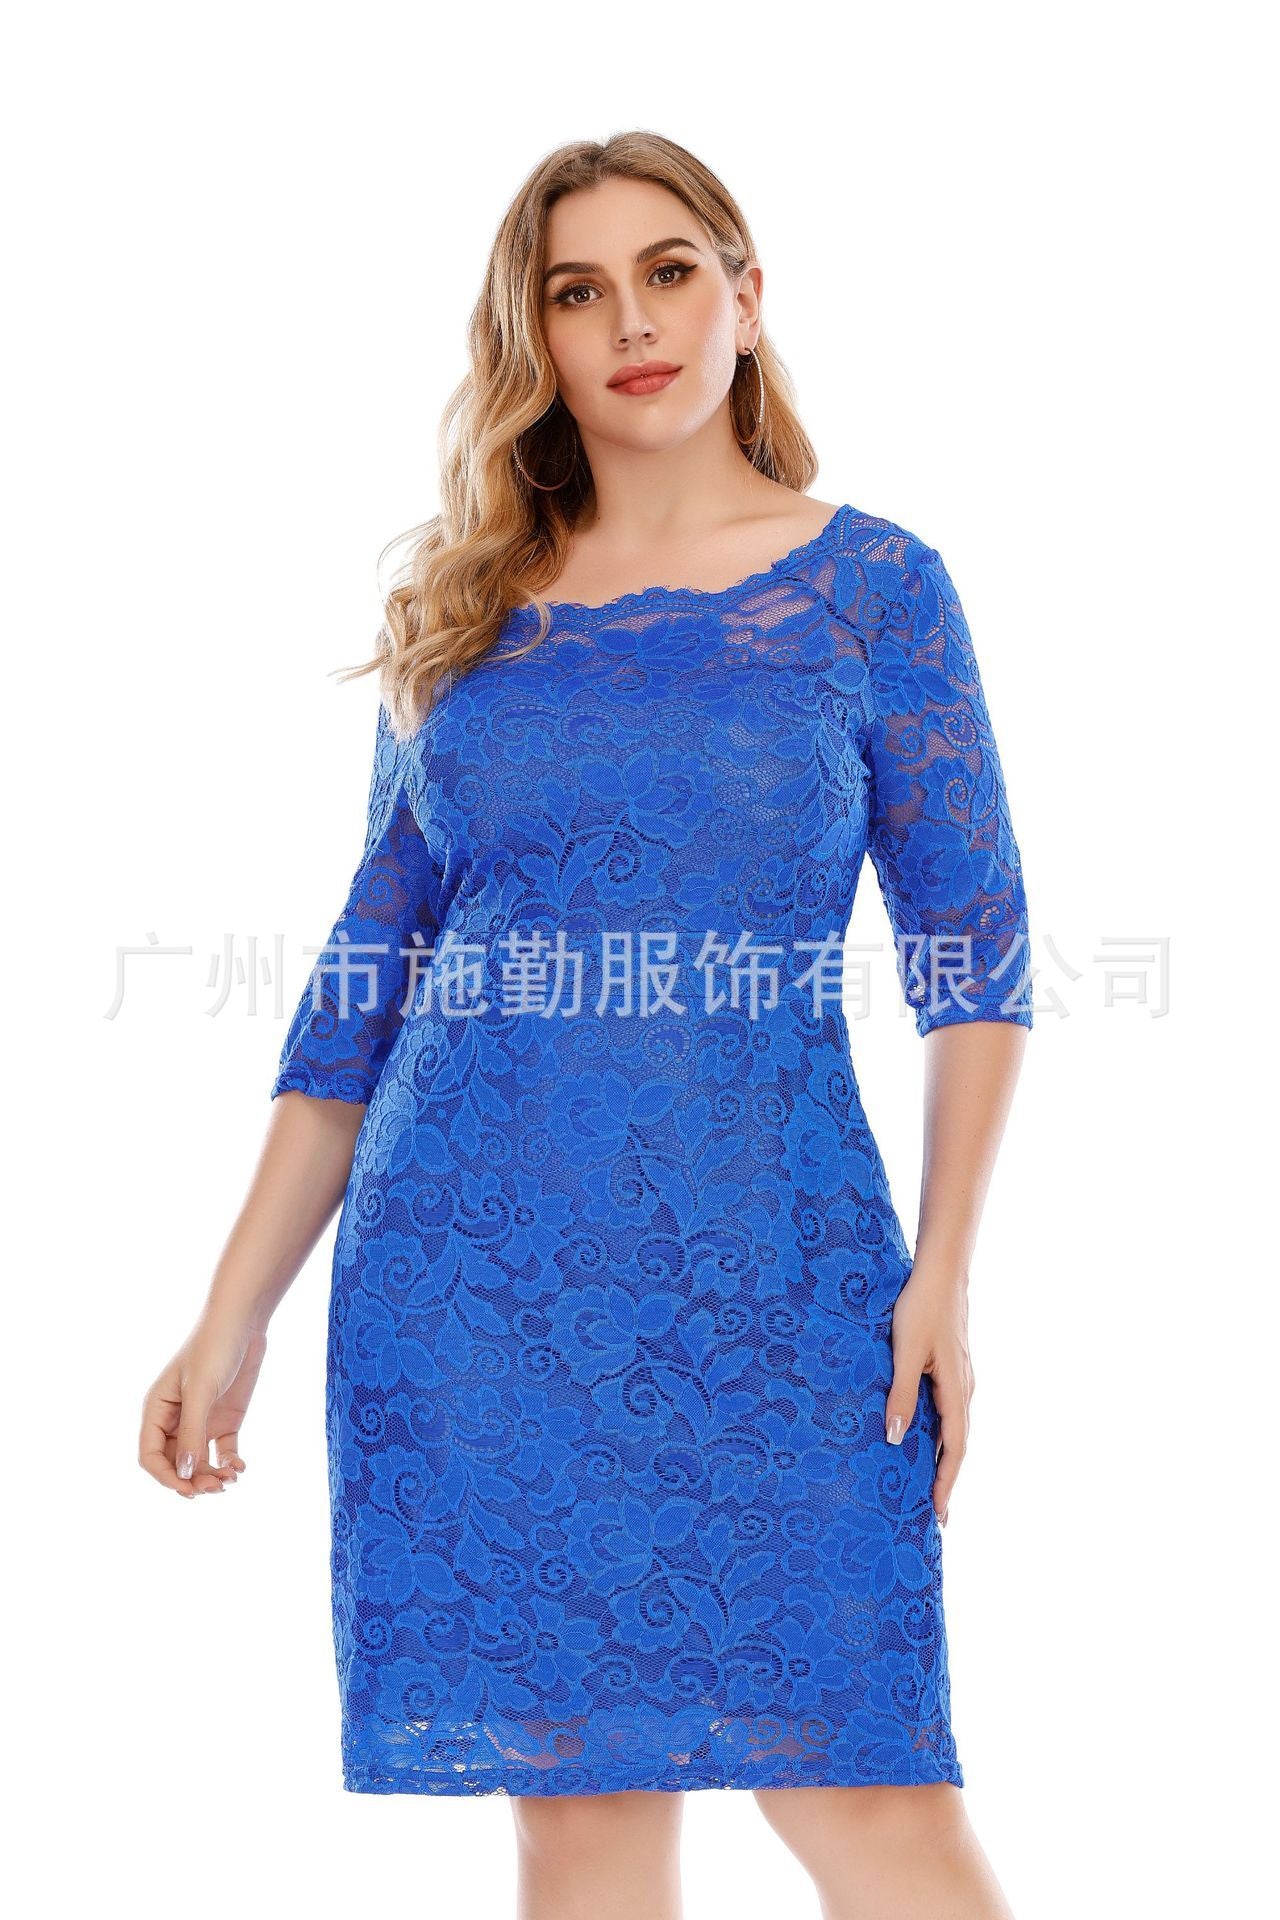 Women Plus Sizes Lace Midi Dresses-STYLEGOING